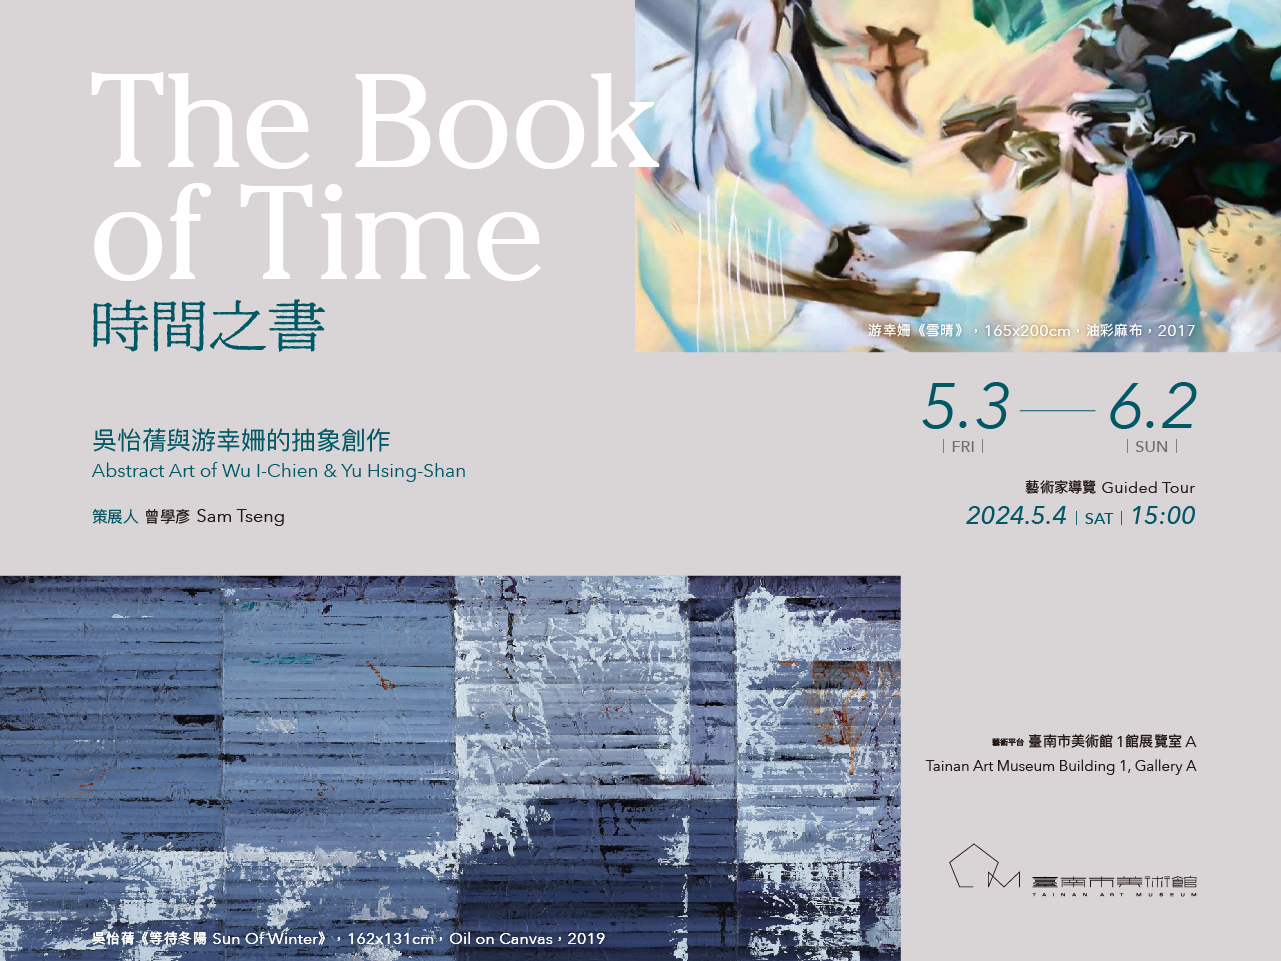 【藝術平台】時間之書–吳怡蒨與游幸姍的抽象創作 The Book of Time - Abstract Art of Wu I-Chien & Yu Hsing-Shan